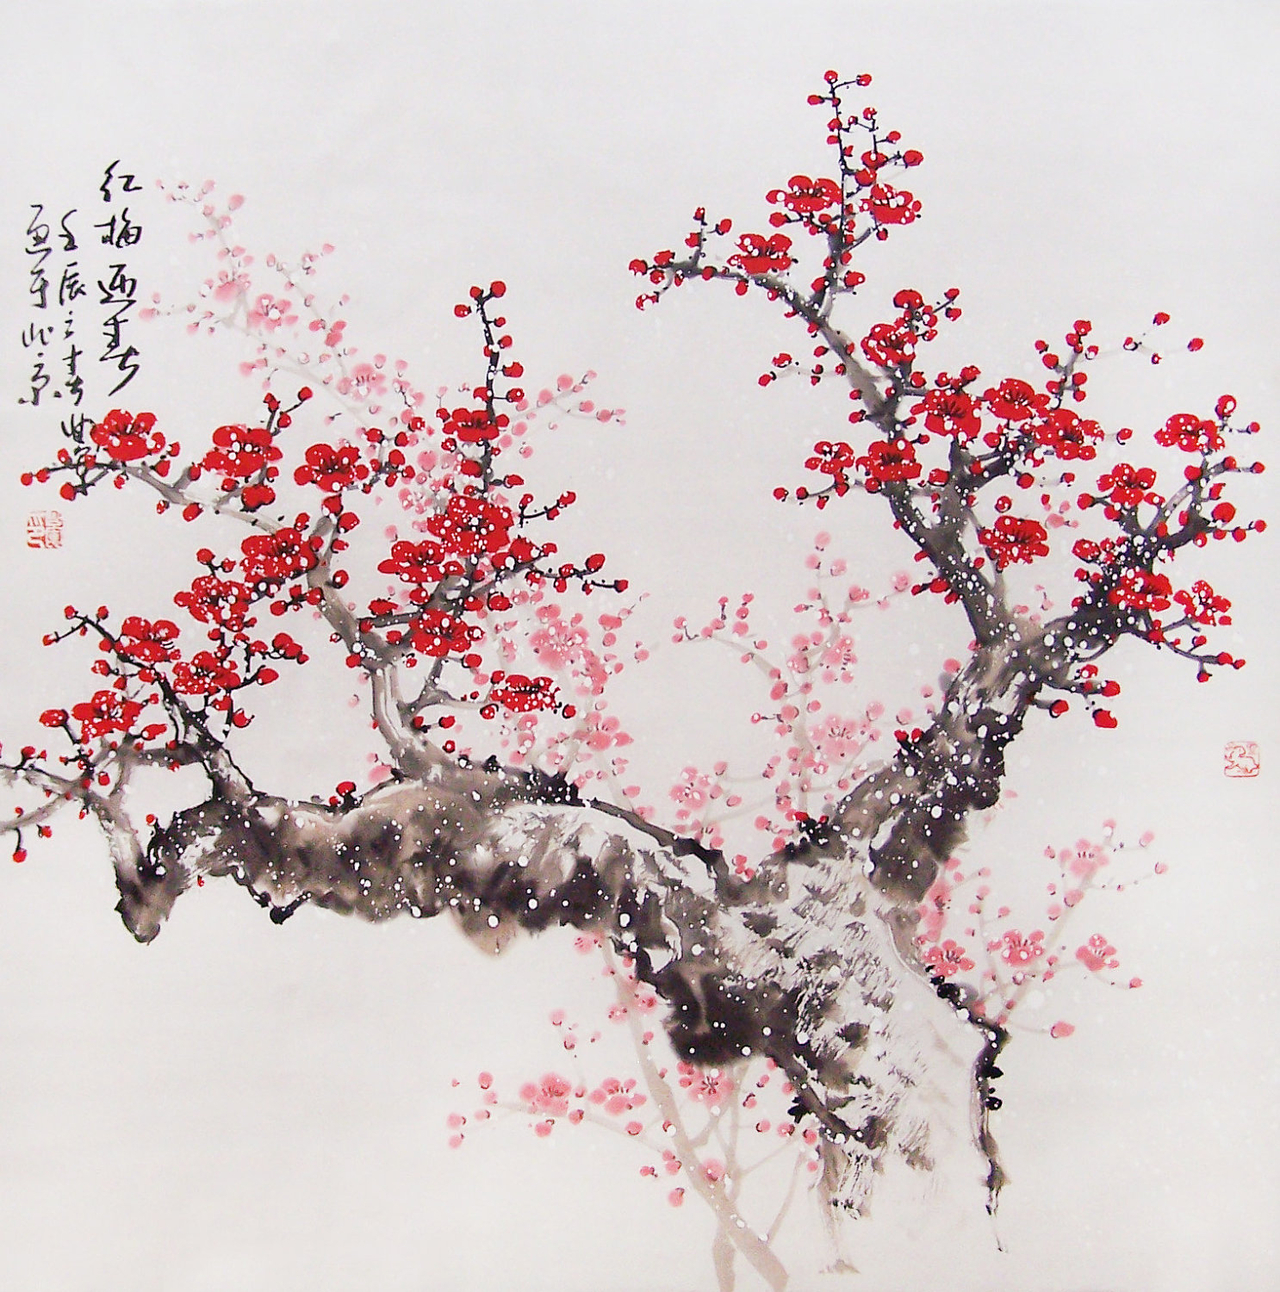 Living A Life In Flower Classic Art Simple Japanese Cherry Blossom Art 1280x1292 Wallpaper Teahub Io